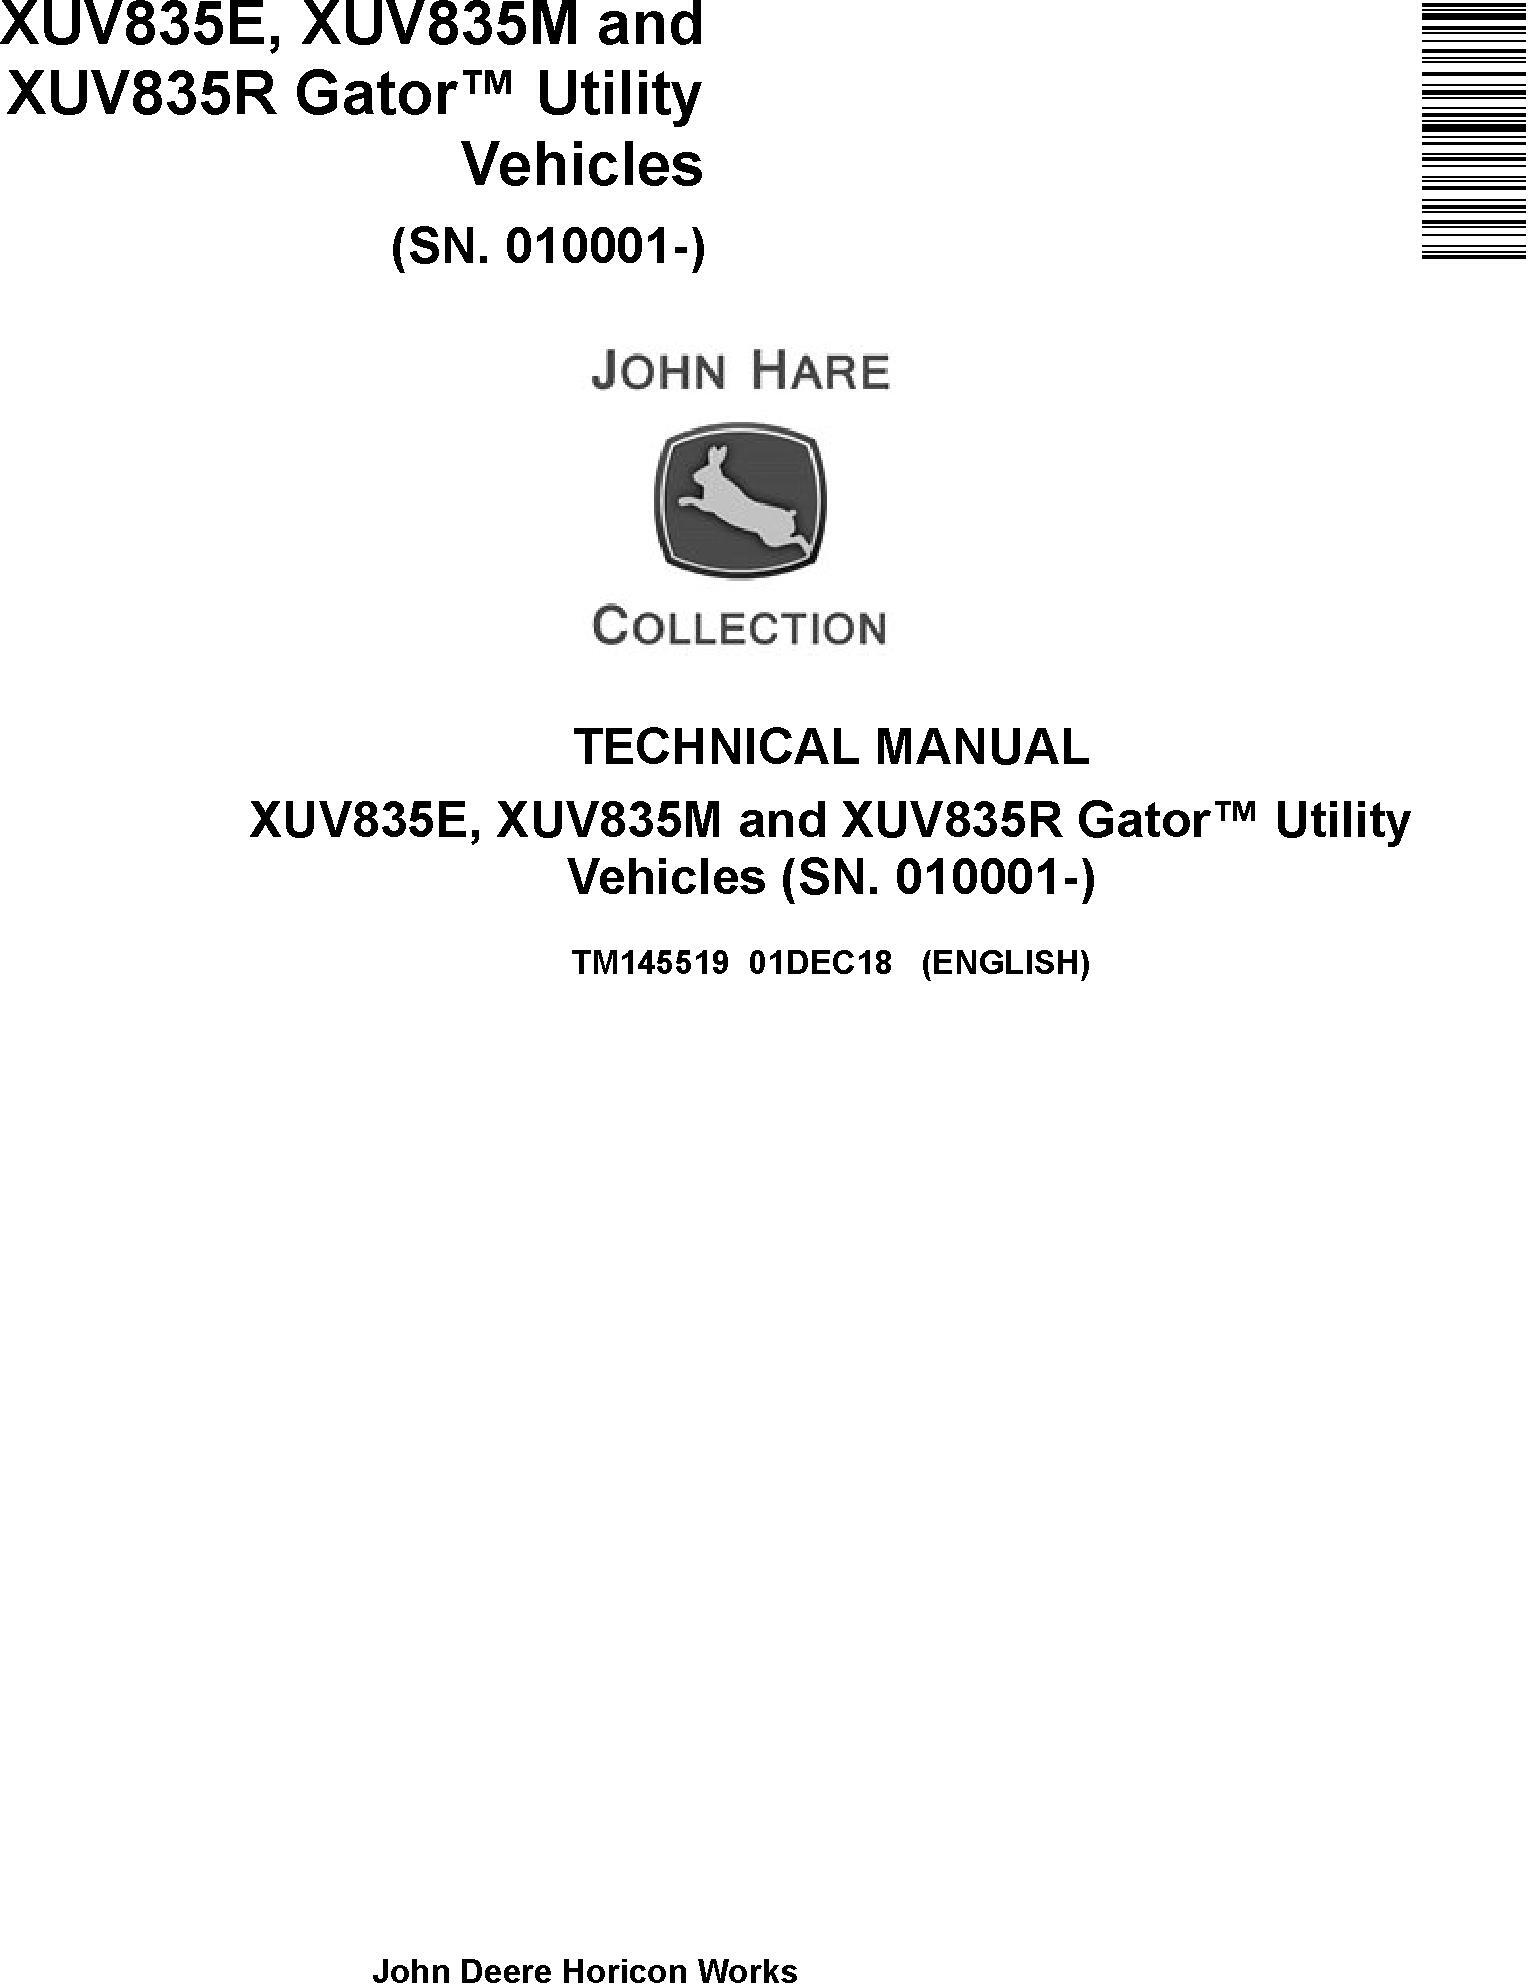 John Deere XUV835E XUV835M XUV835R Gator Utility Vehicles Technical Manual TM145519